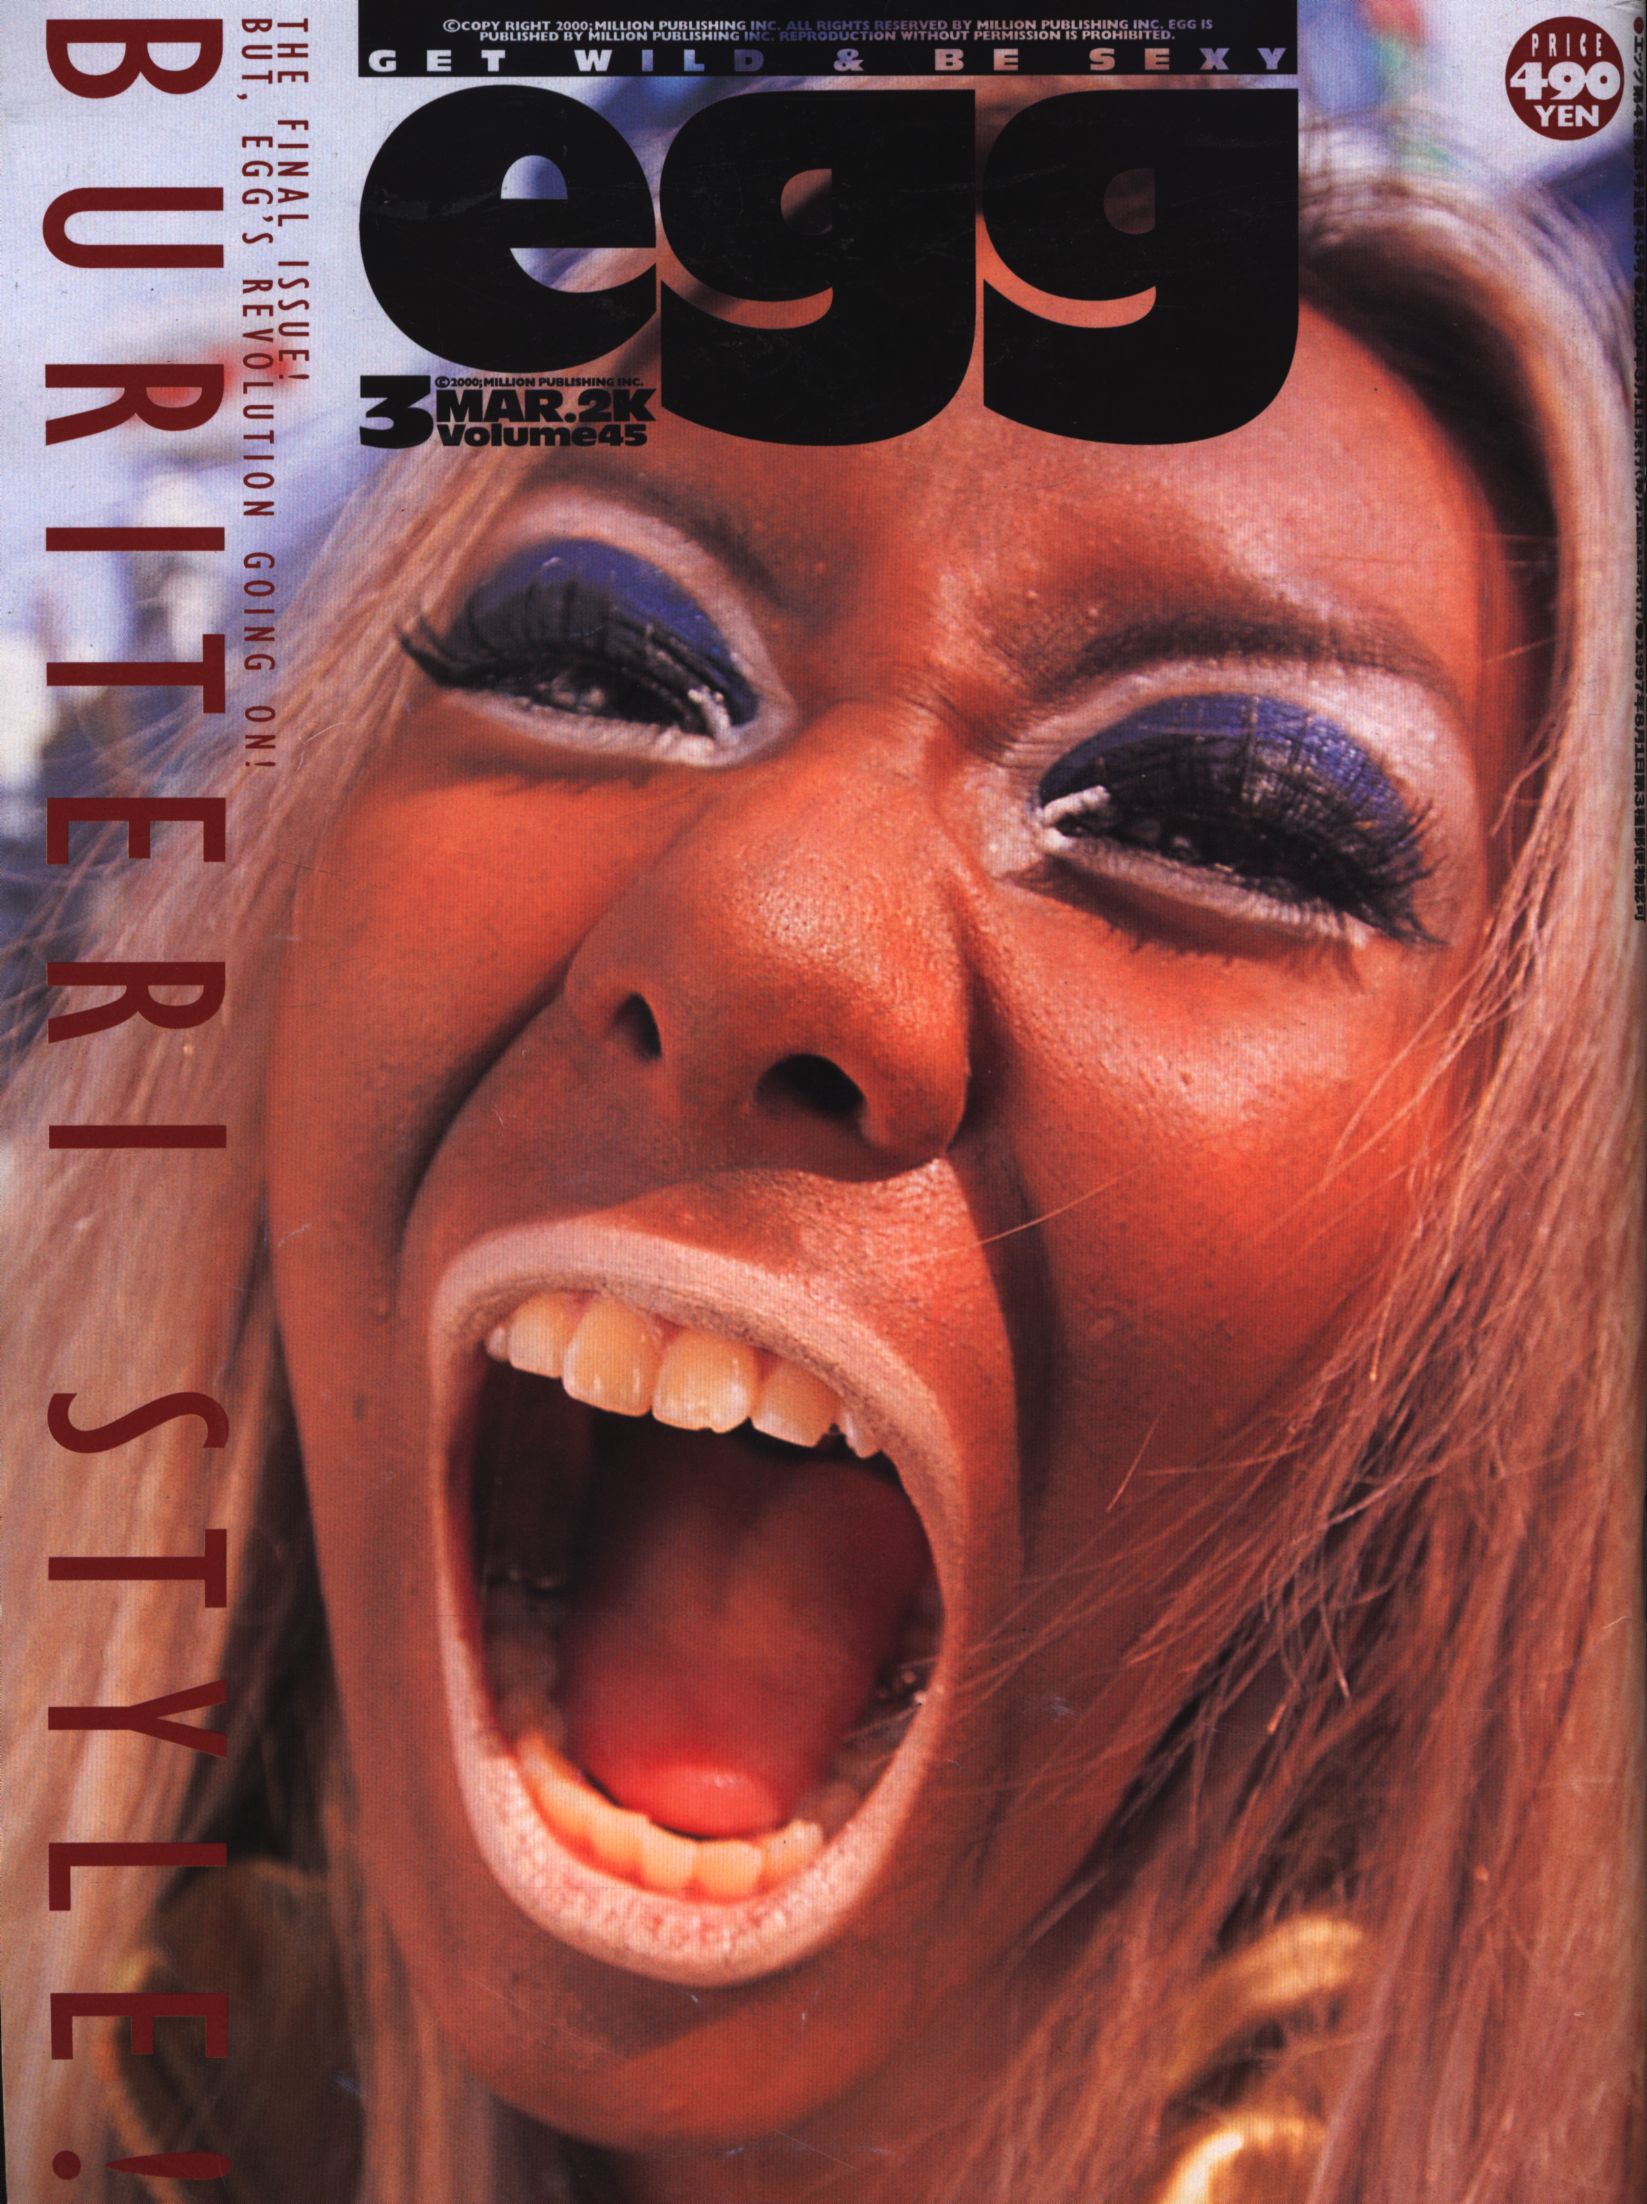 egg雑誌 2000年 2.8.9.10.11.12月号 激安商品